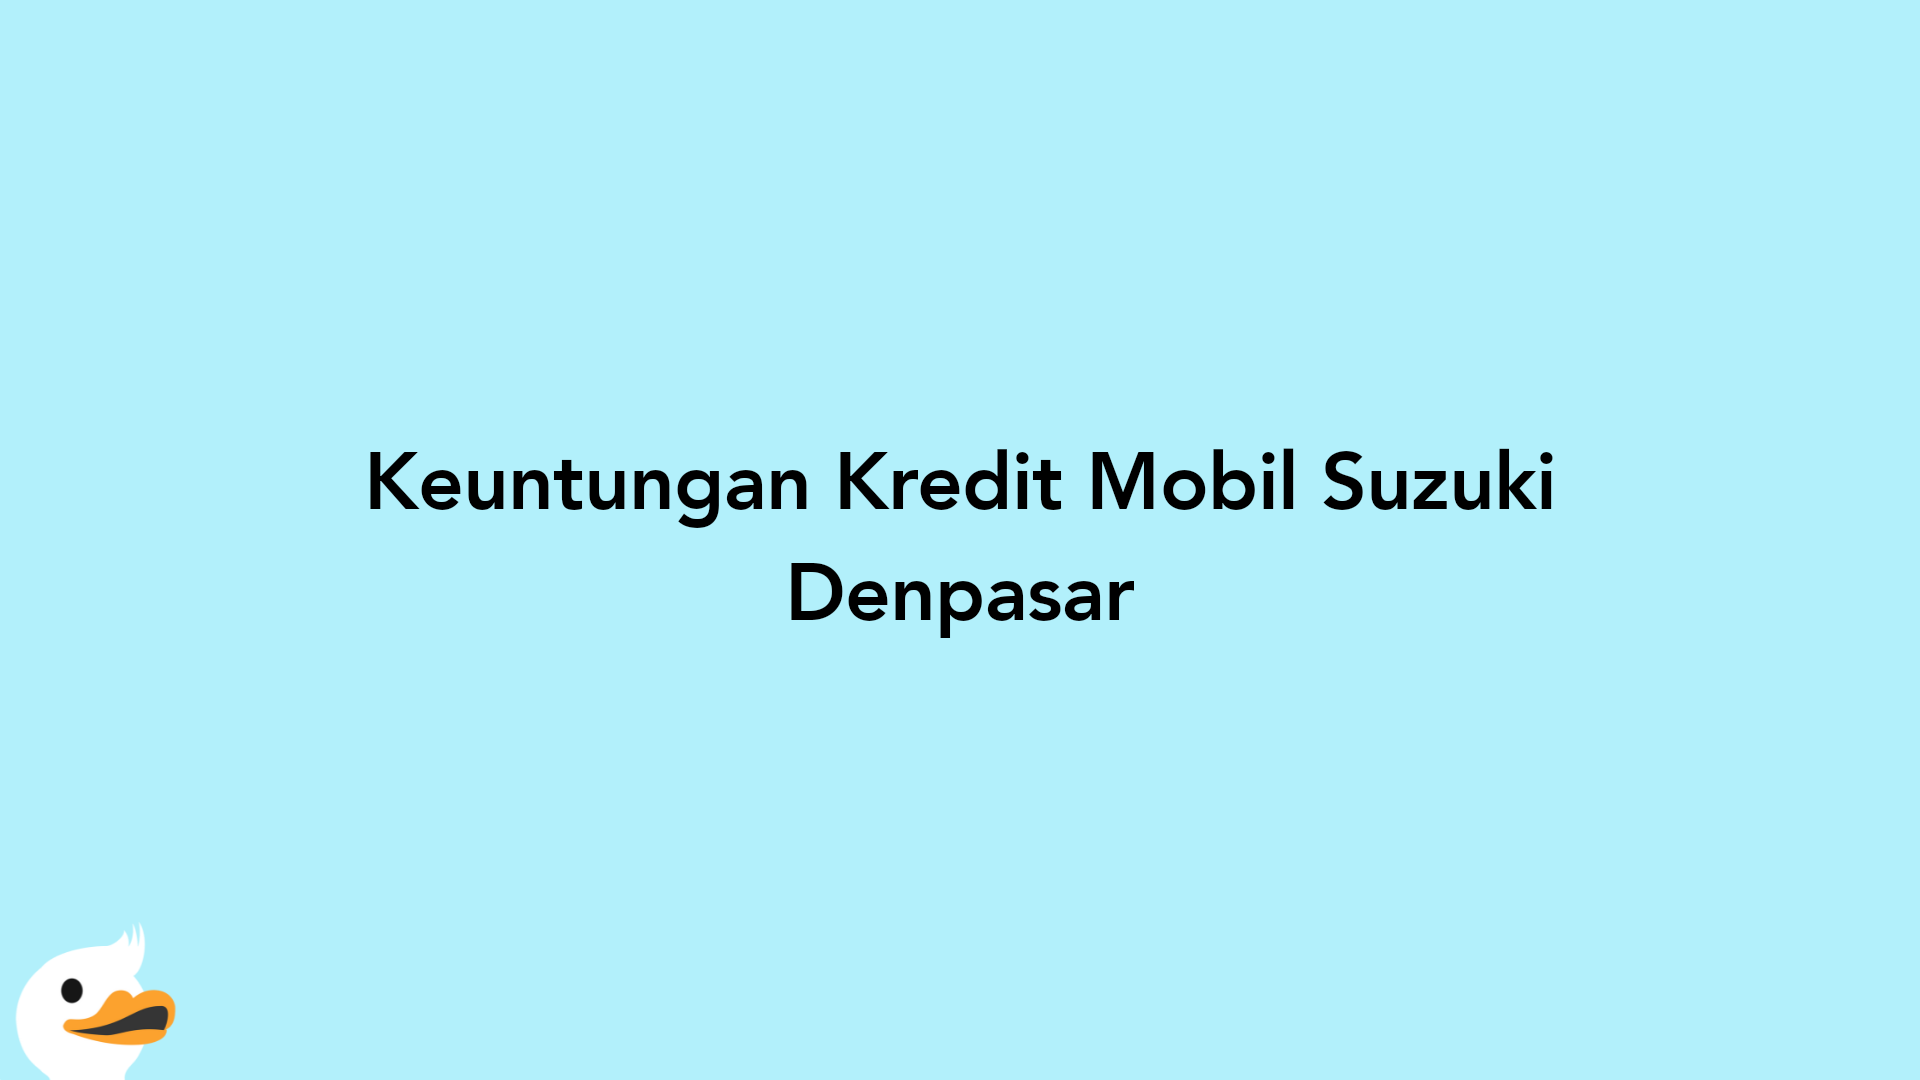 Keuntungan Kredit Mobil Suzuki Denpasar